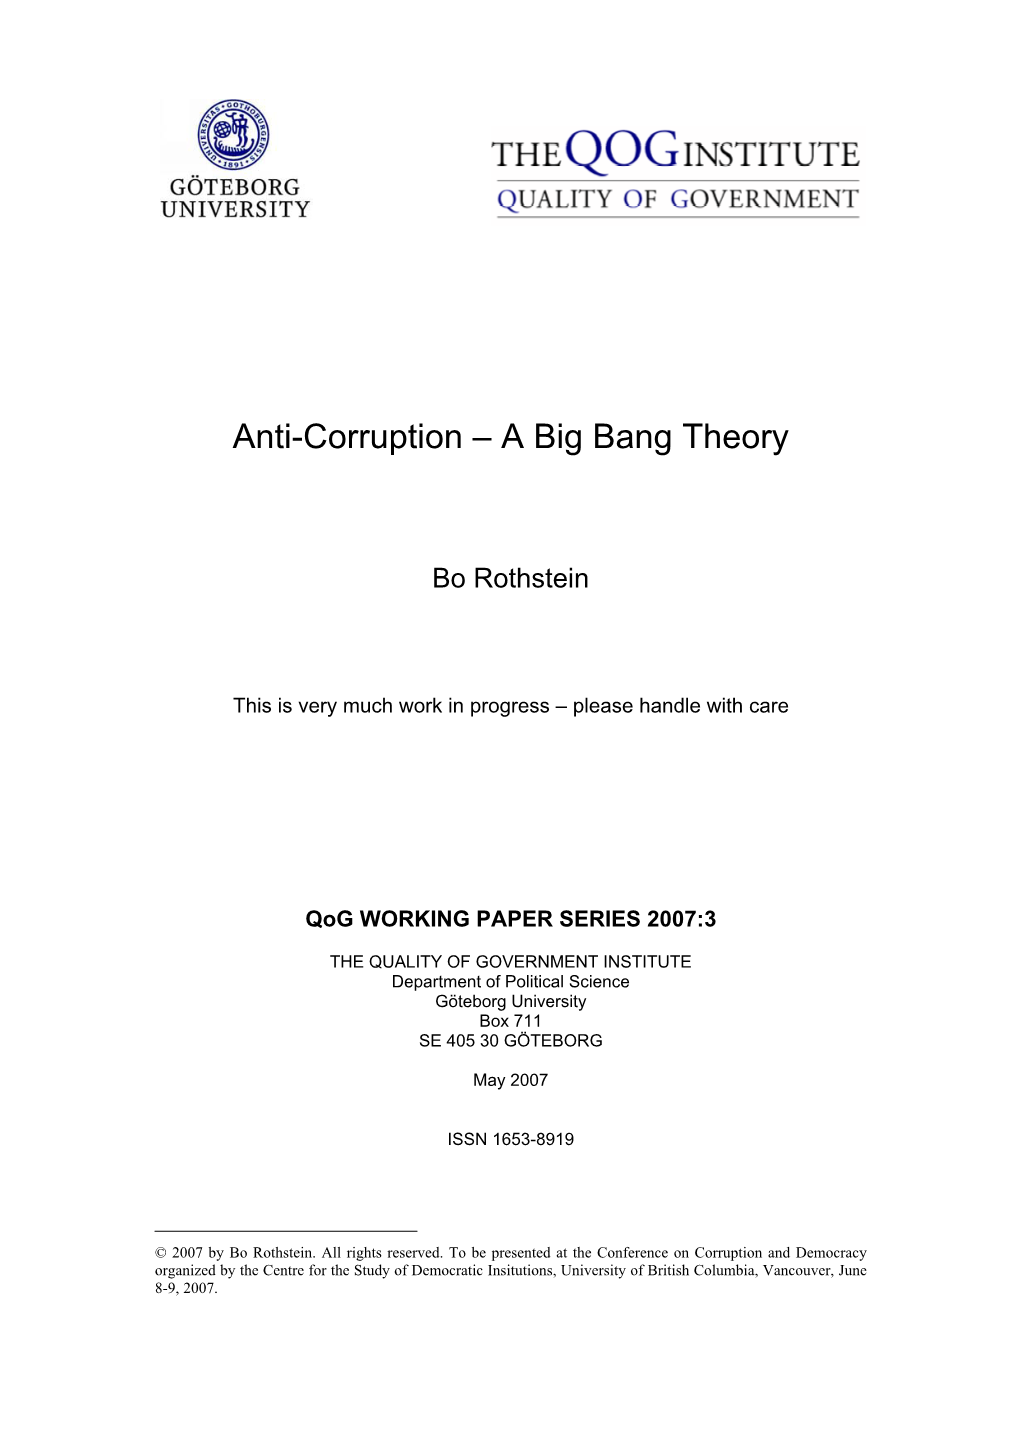 Anti-Corruption – a Big Bang Theory